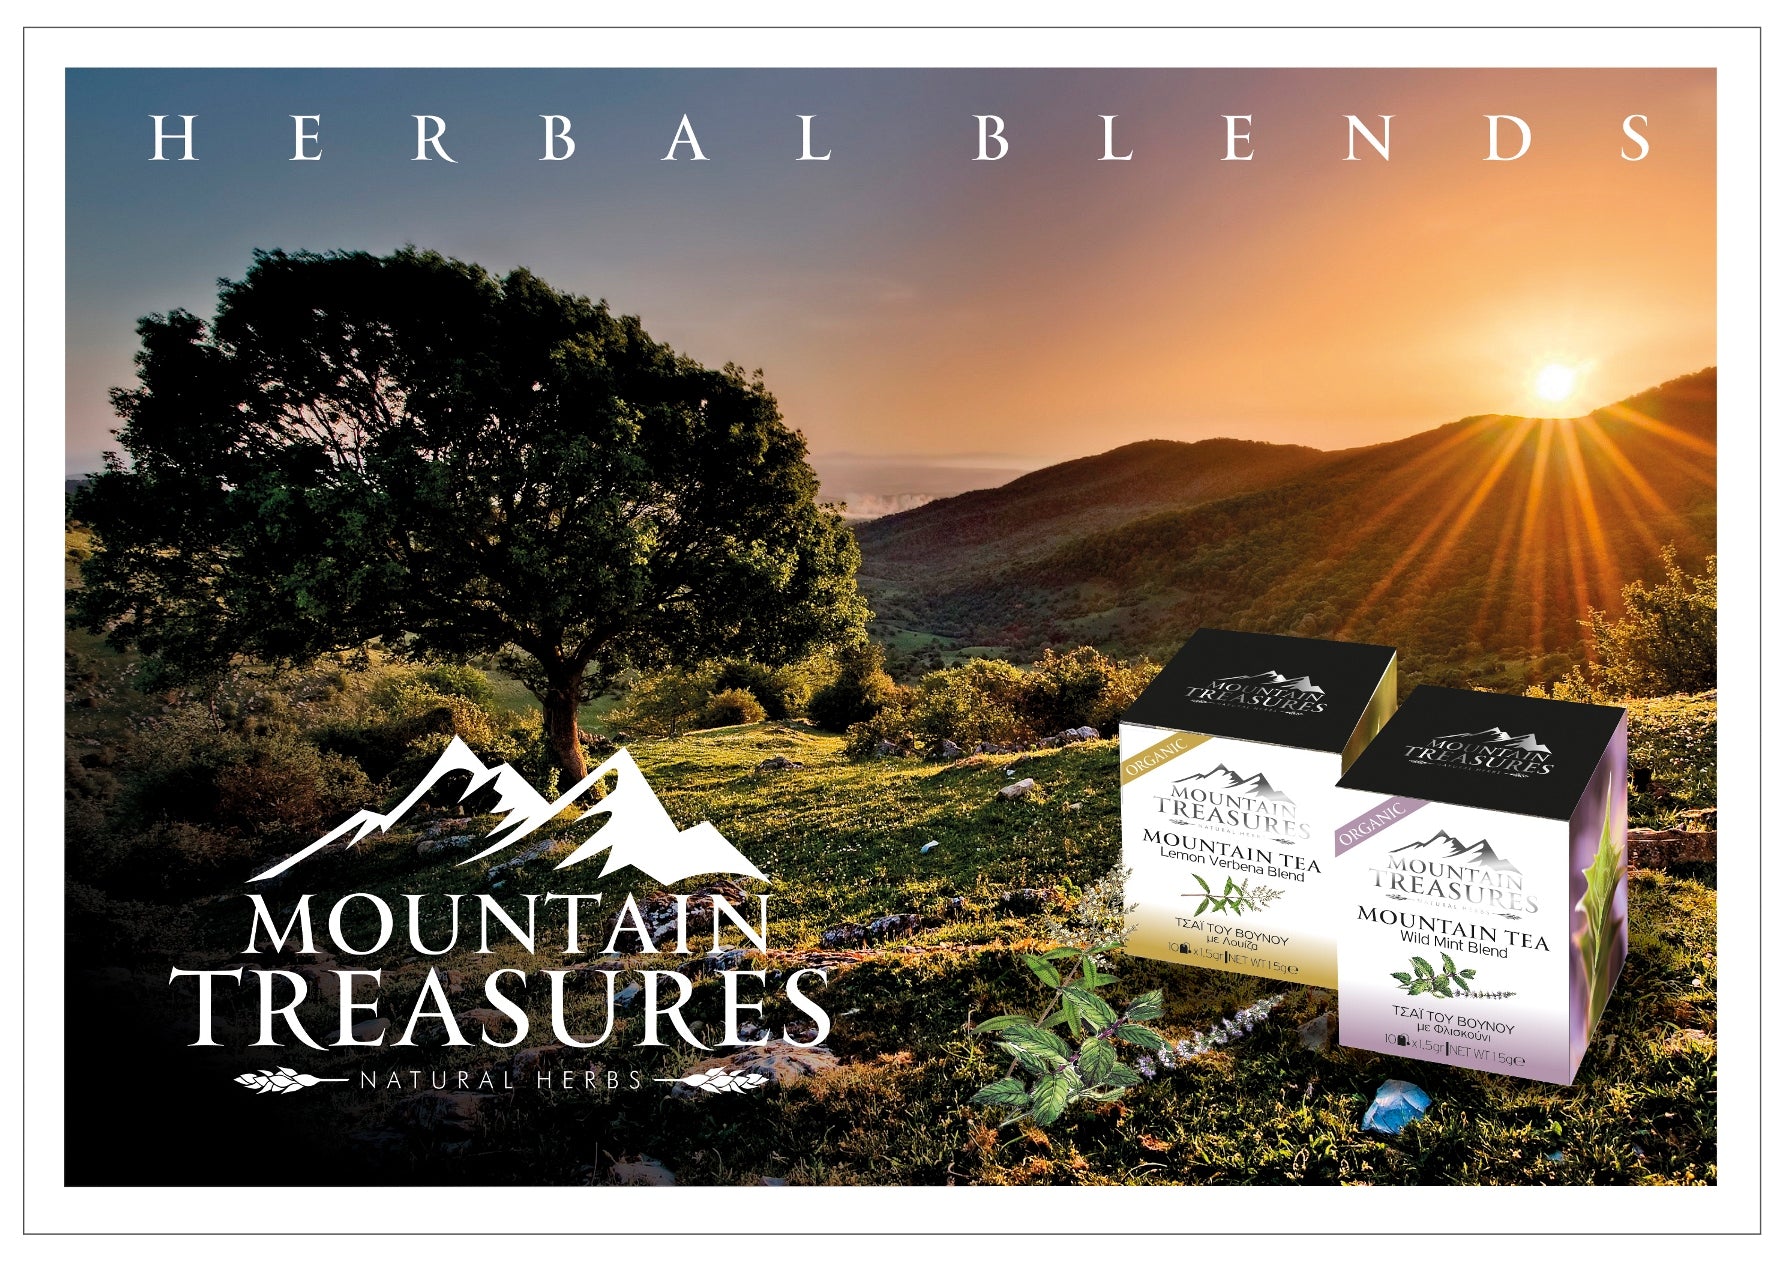 Mountain tea blends with lemon verbena and wild mint by gourmet grocer grecian purveyor.